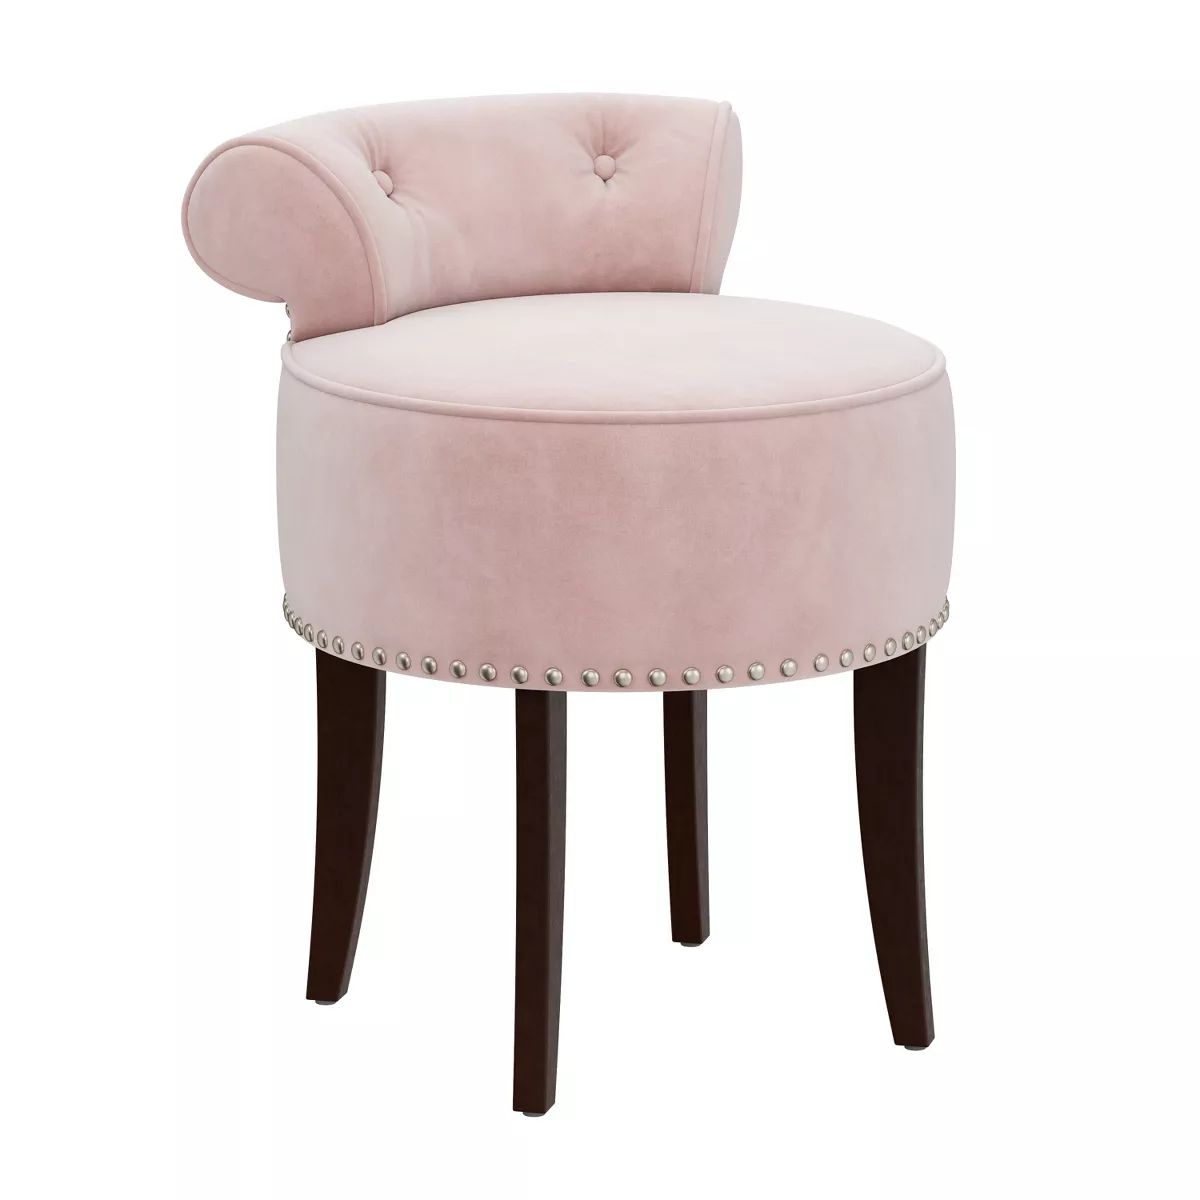 22.5" Lena Wood and Upholstered Vanity Stool - Hillsdale Furniture | Target